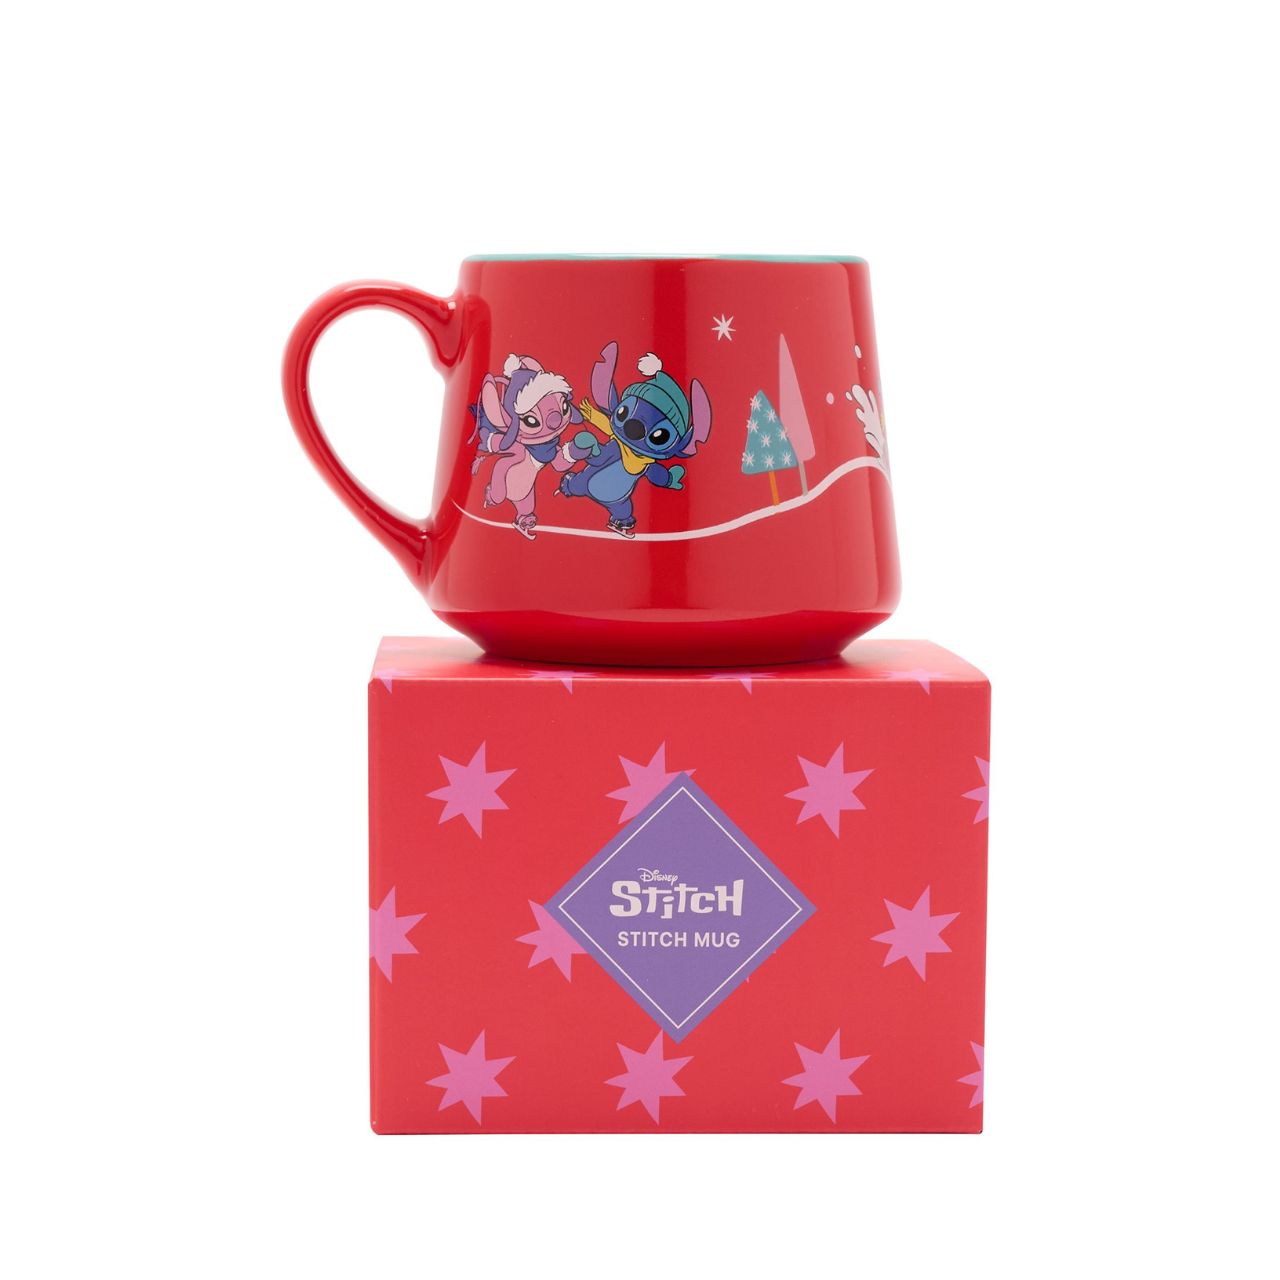 Disney Stitch Christmas Mug "Merry Everything"  A Merry Everything Stitch mug by DISNEY.  This colourful festive mug is brimming with festive cheer for Disney fans.